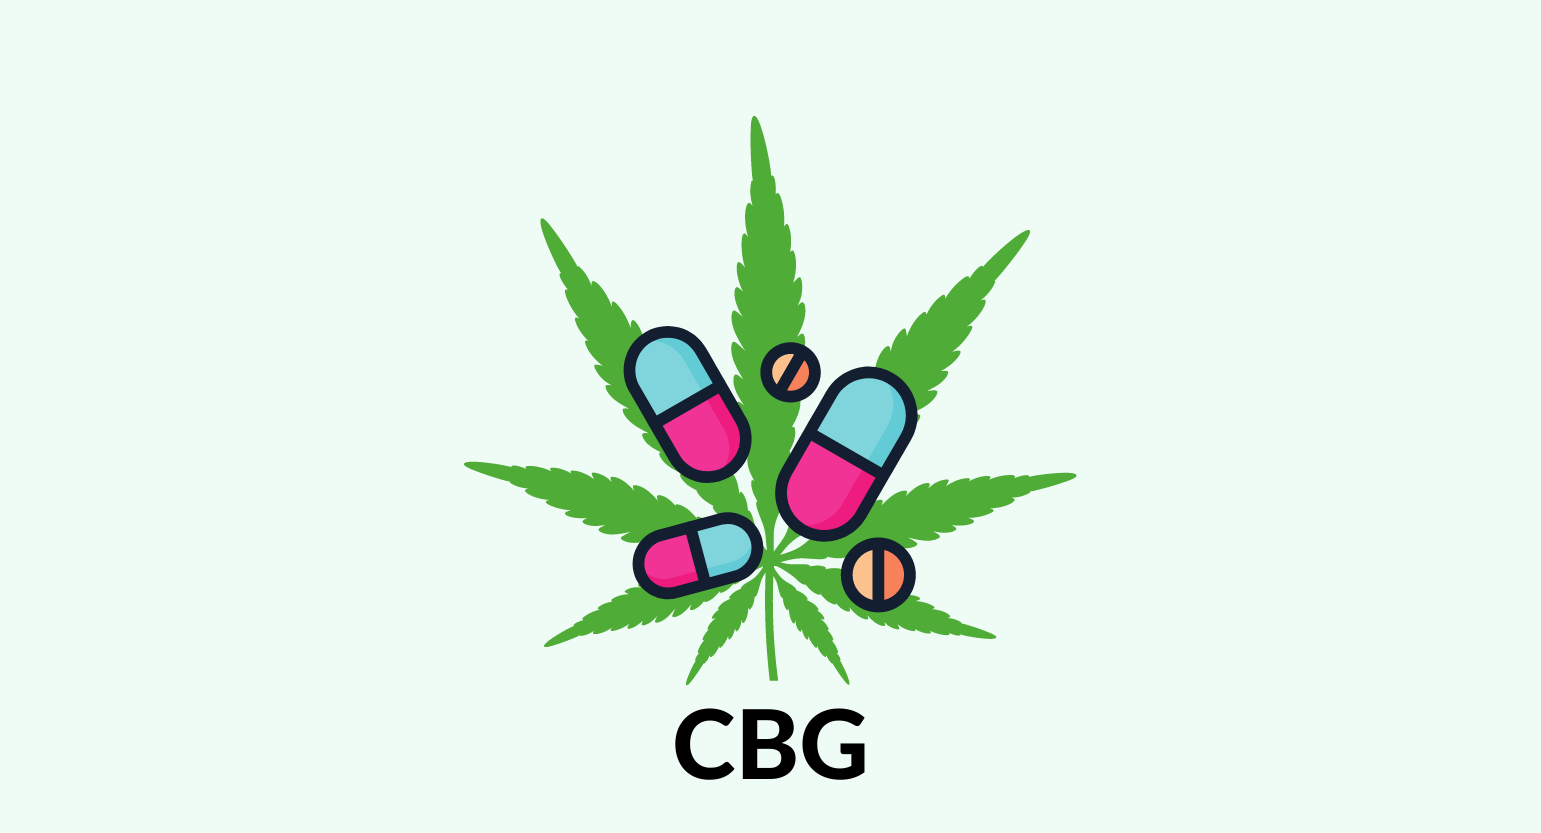 CBG and hemp leaf illustration